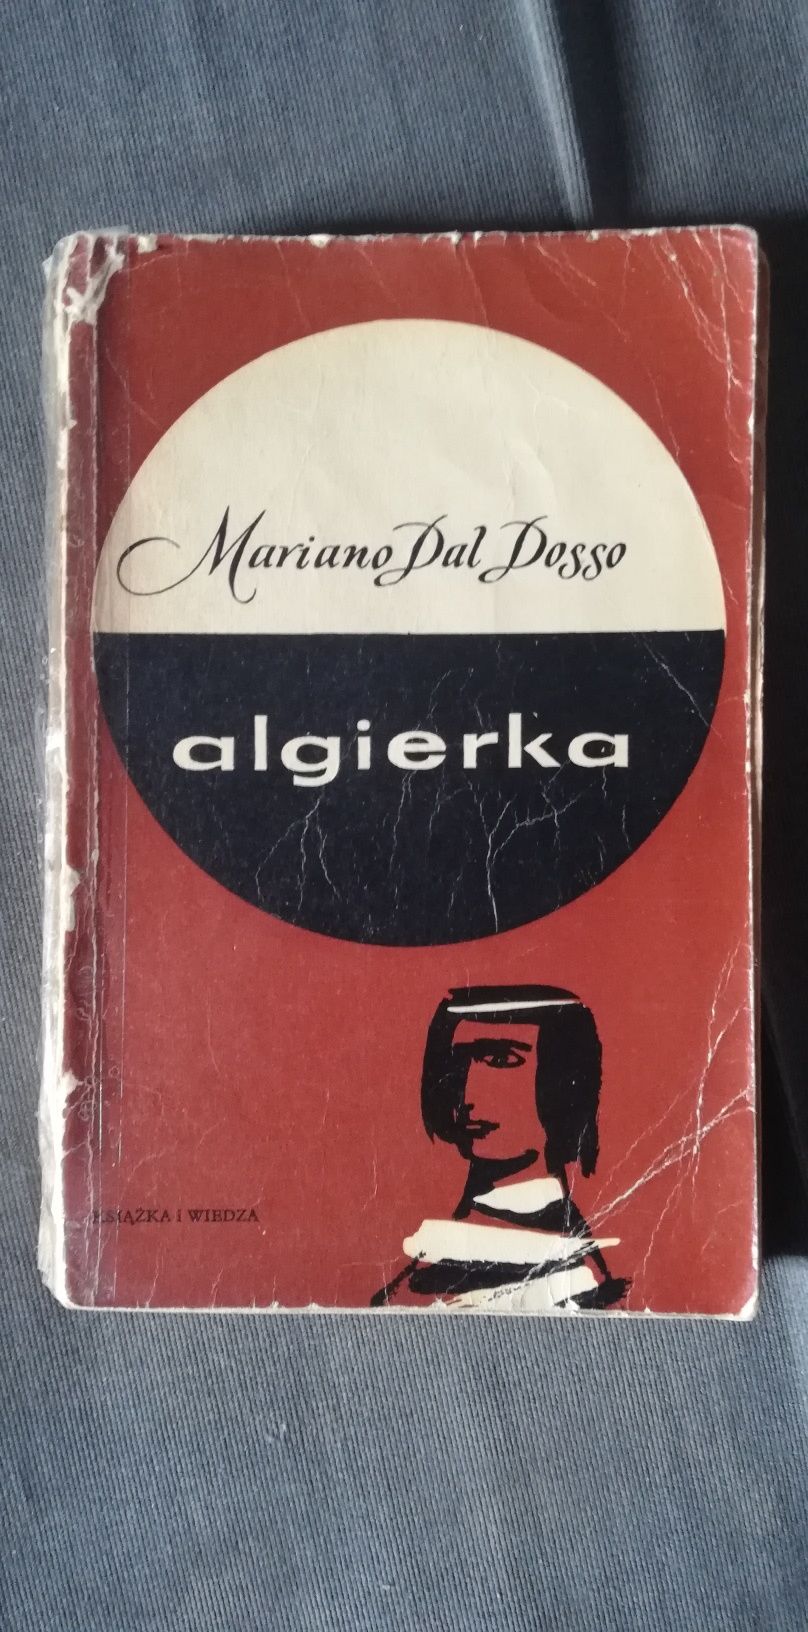 Algierka-Mariano Dal Dosdo